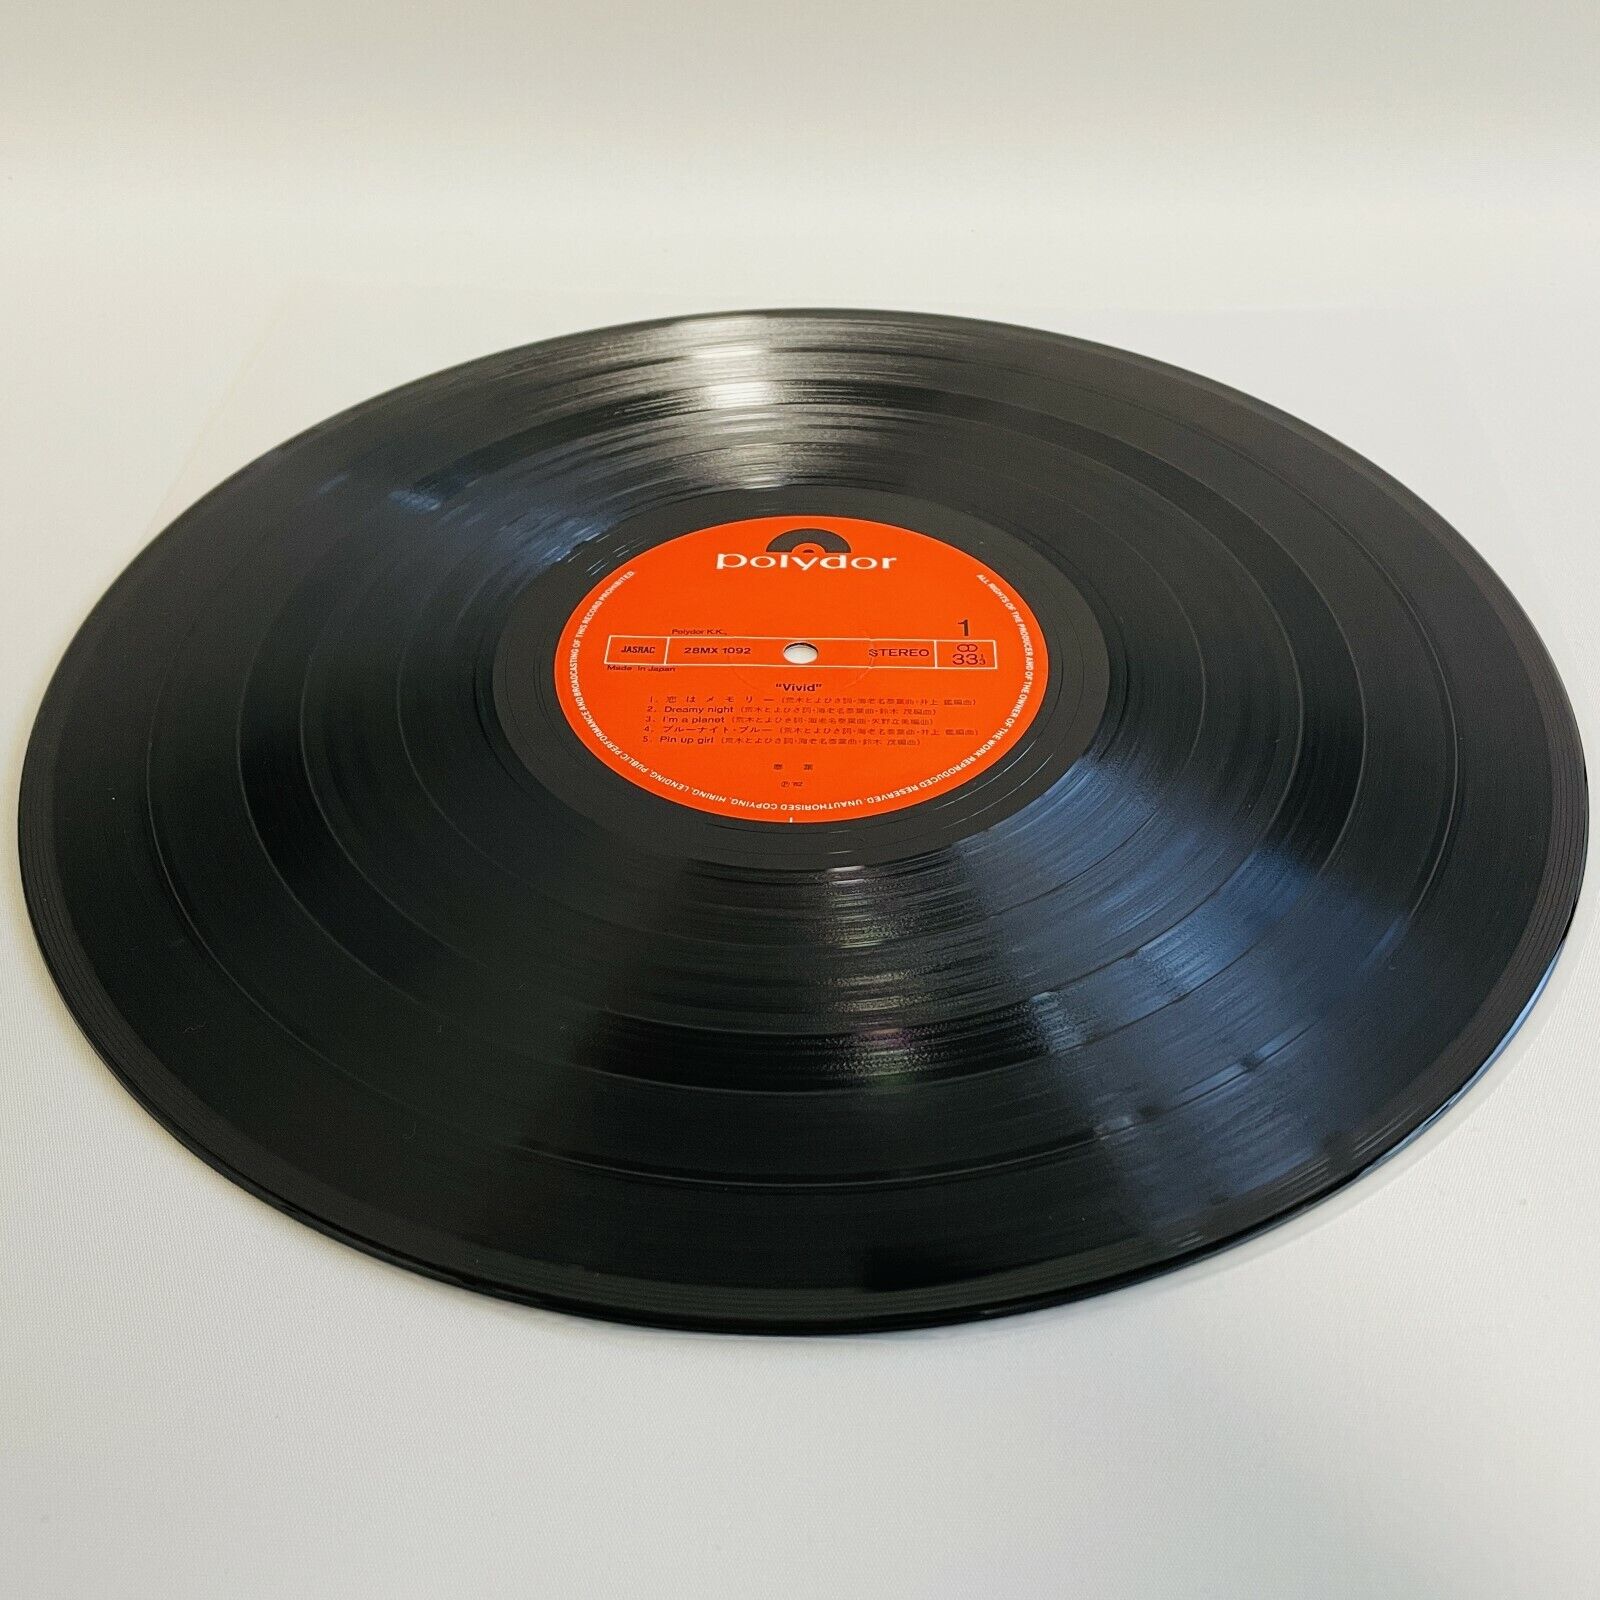 Yasuha Vivid Polydor 28MX 1092